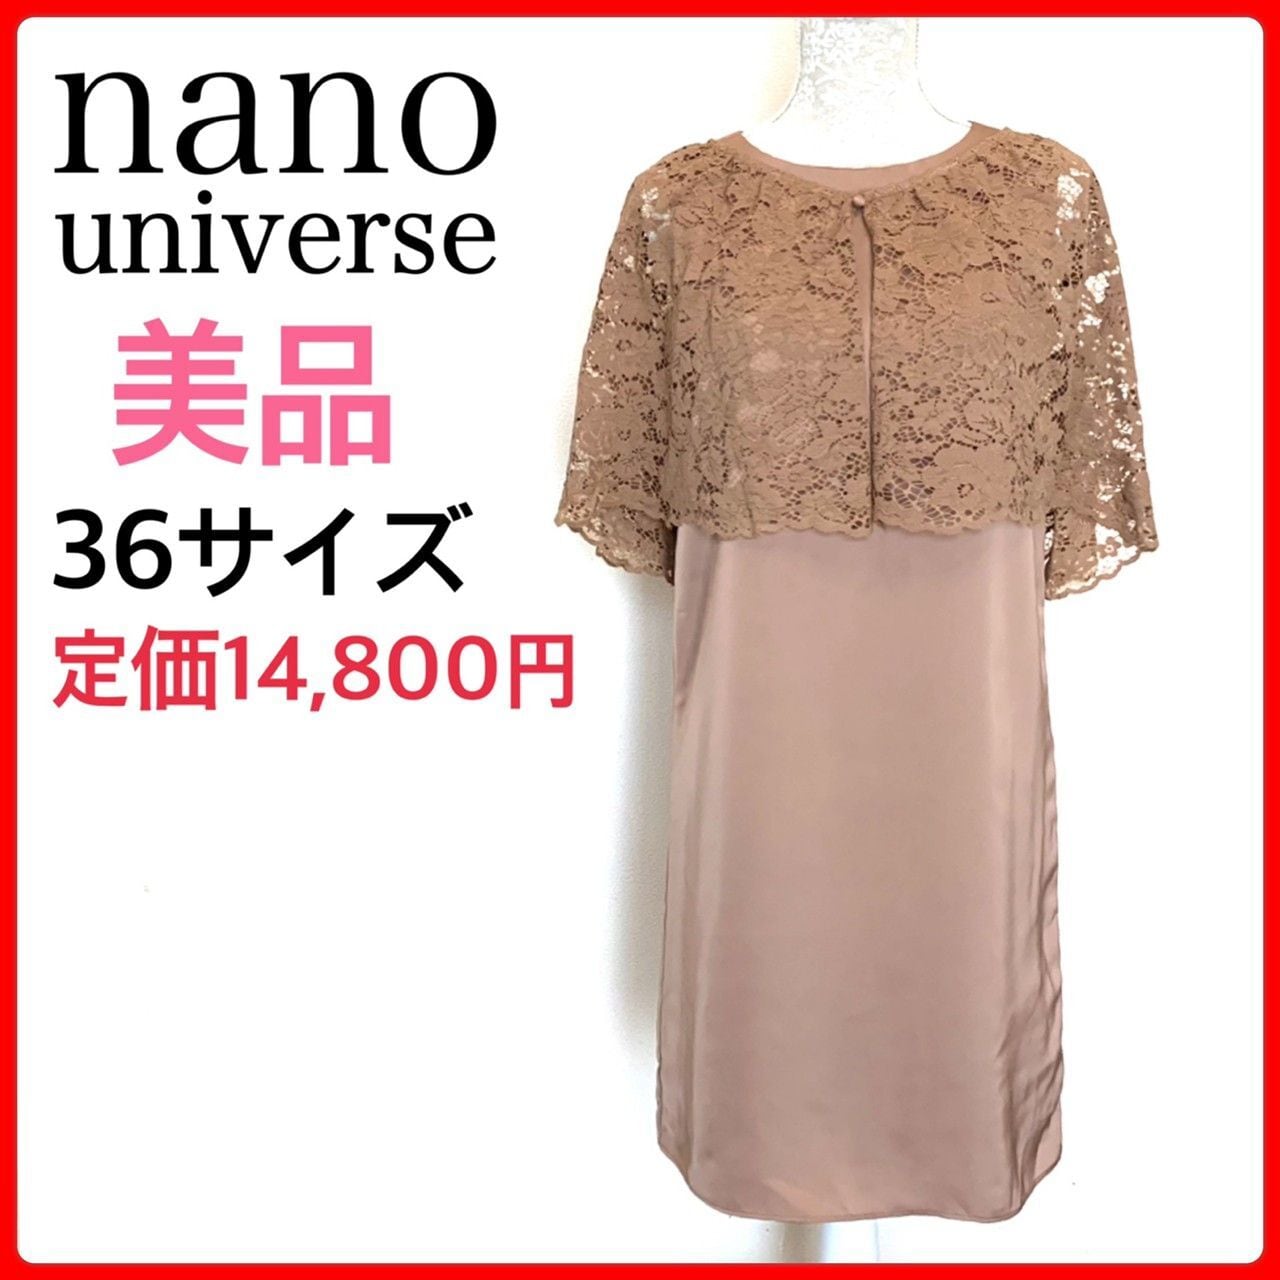 nano universe ナノユニバース ワンピース - 1